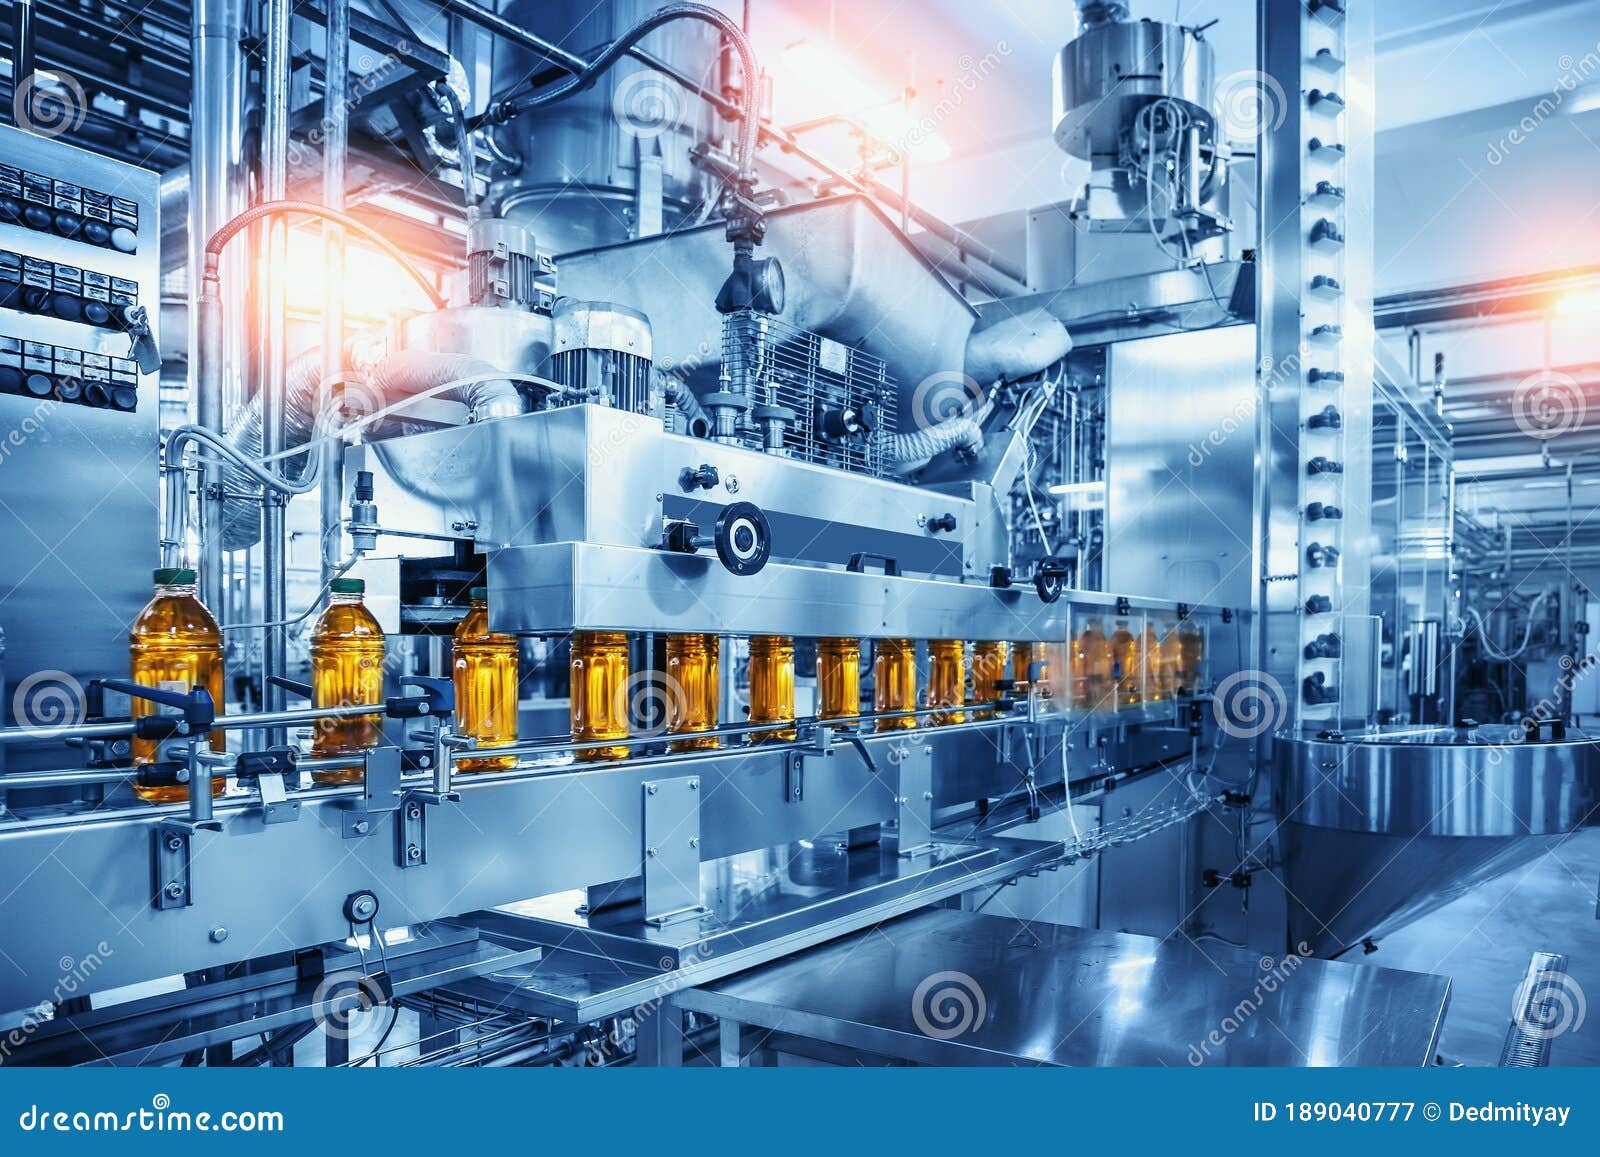 conveyor belt with juice bottles on beverage factory interior in blue color